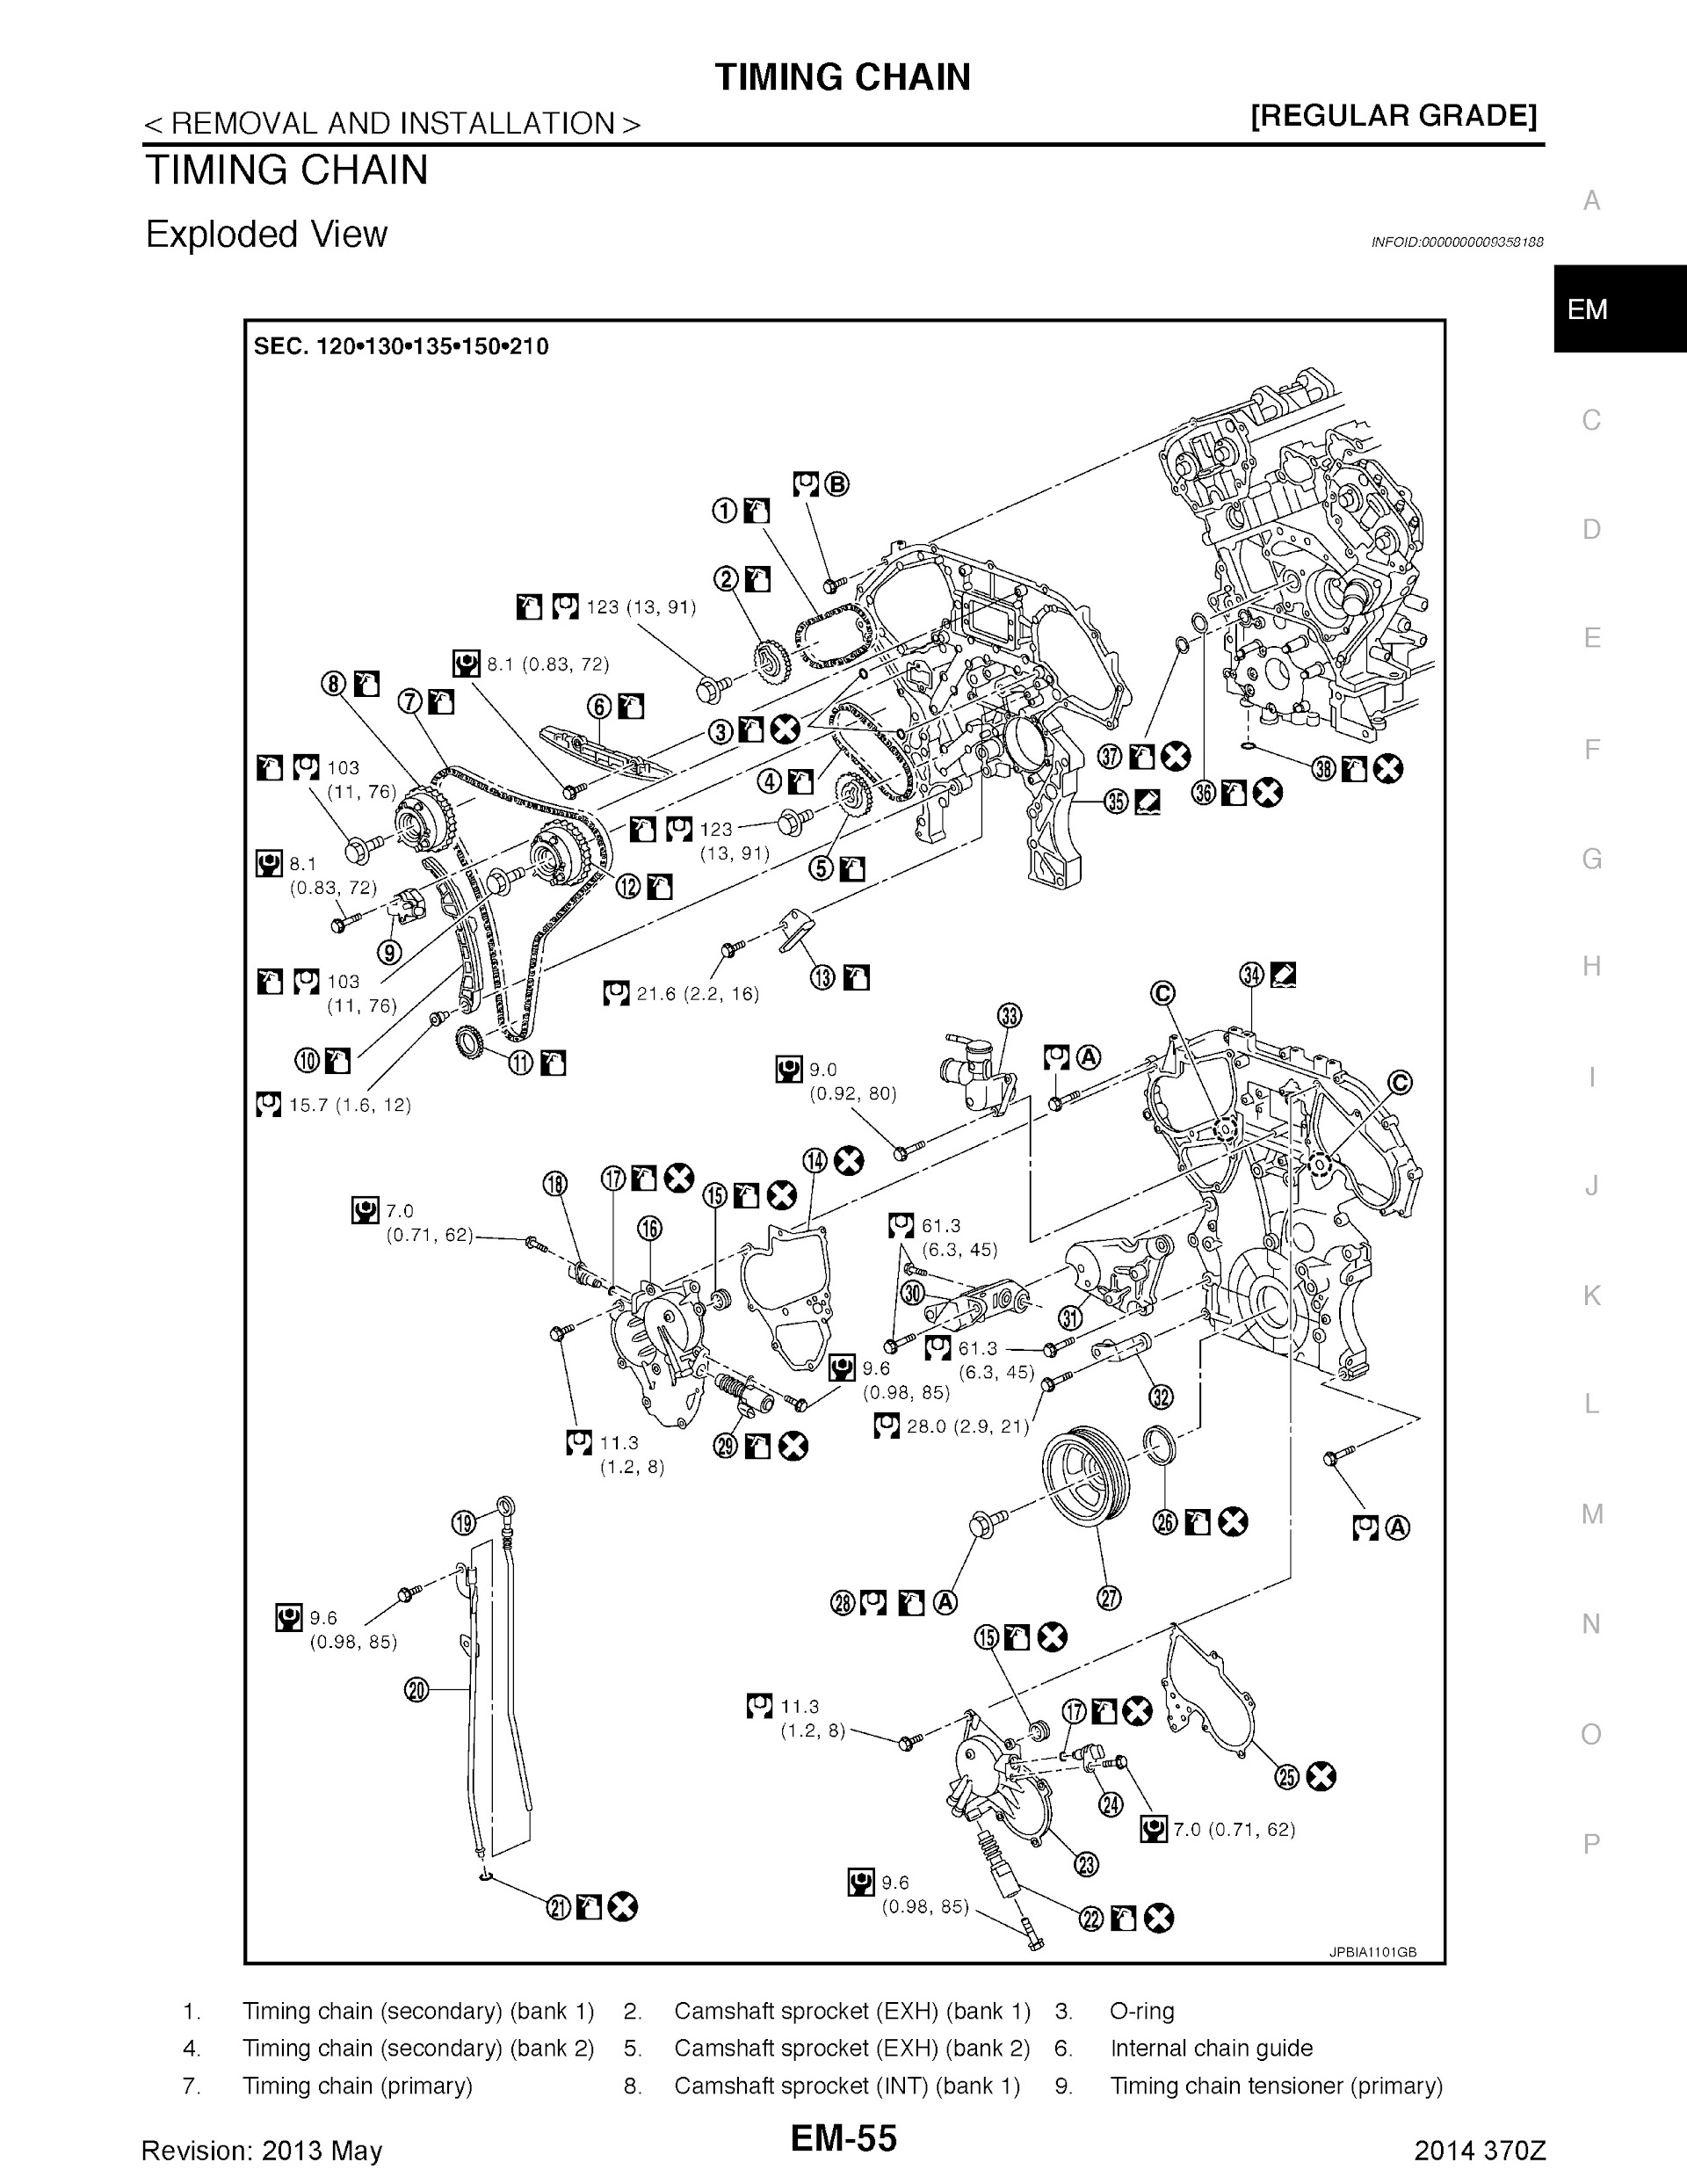 CONTENTS: 2014 Nissan 370Z Repair Manual, Timing Chain